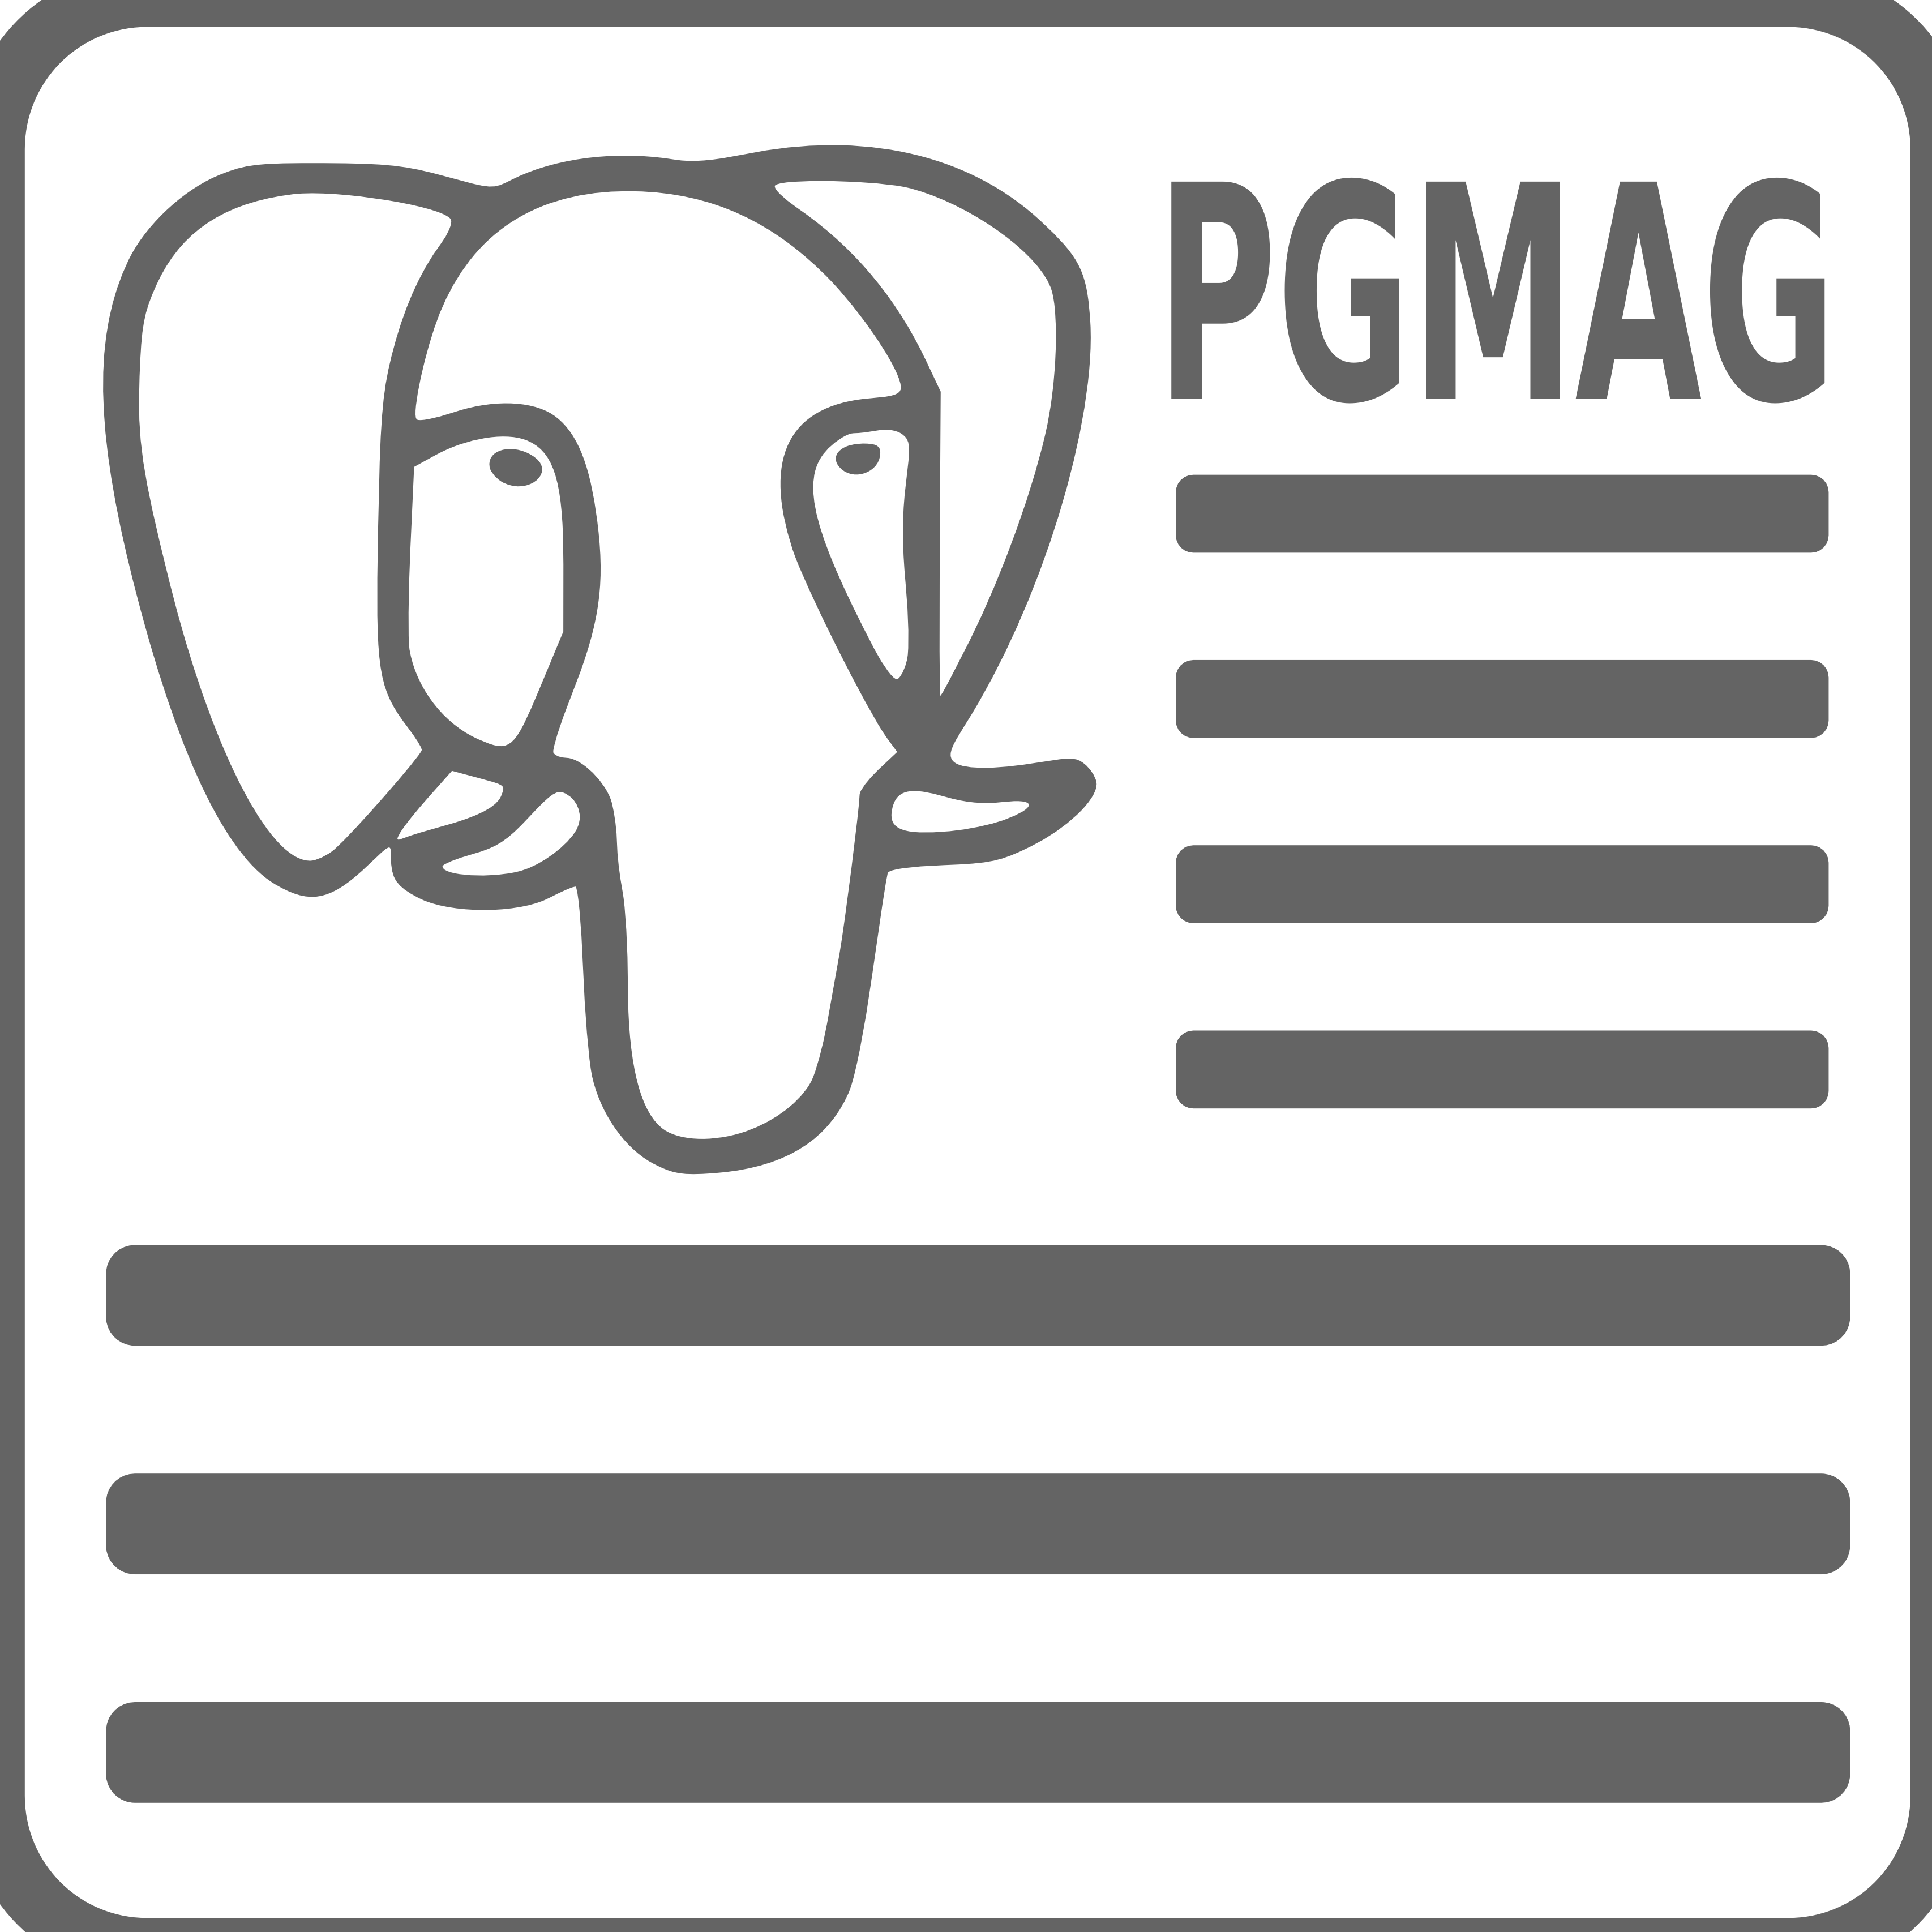 pgmag-logo-v1.1024x1024.300dpi.png